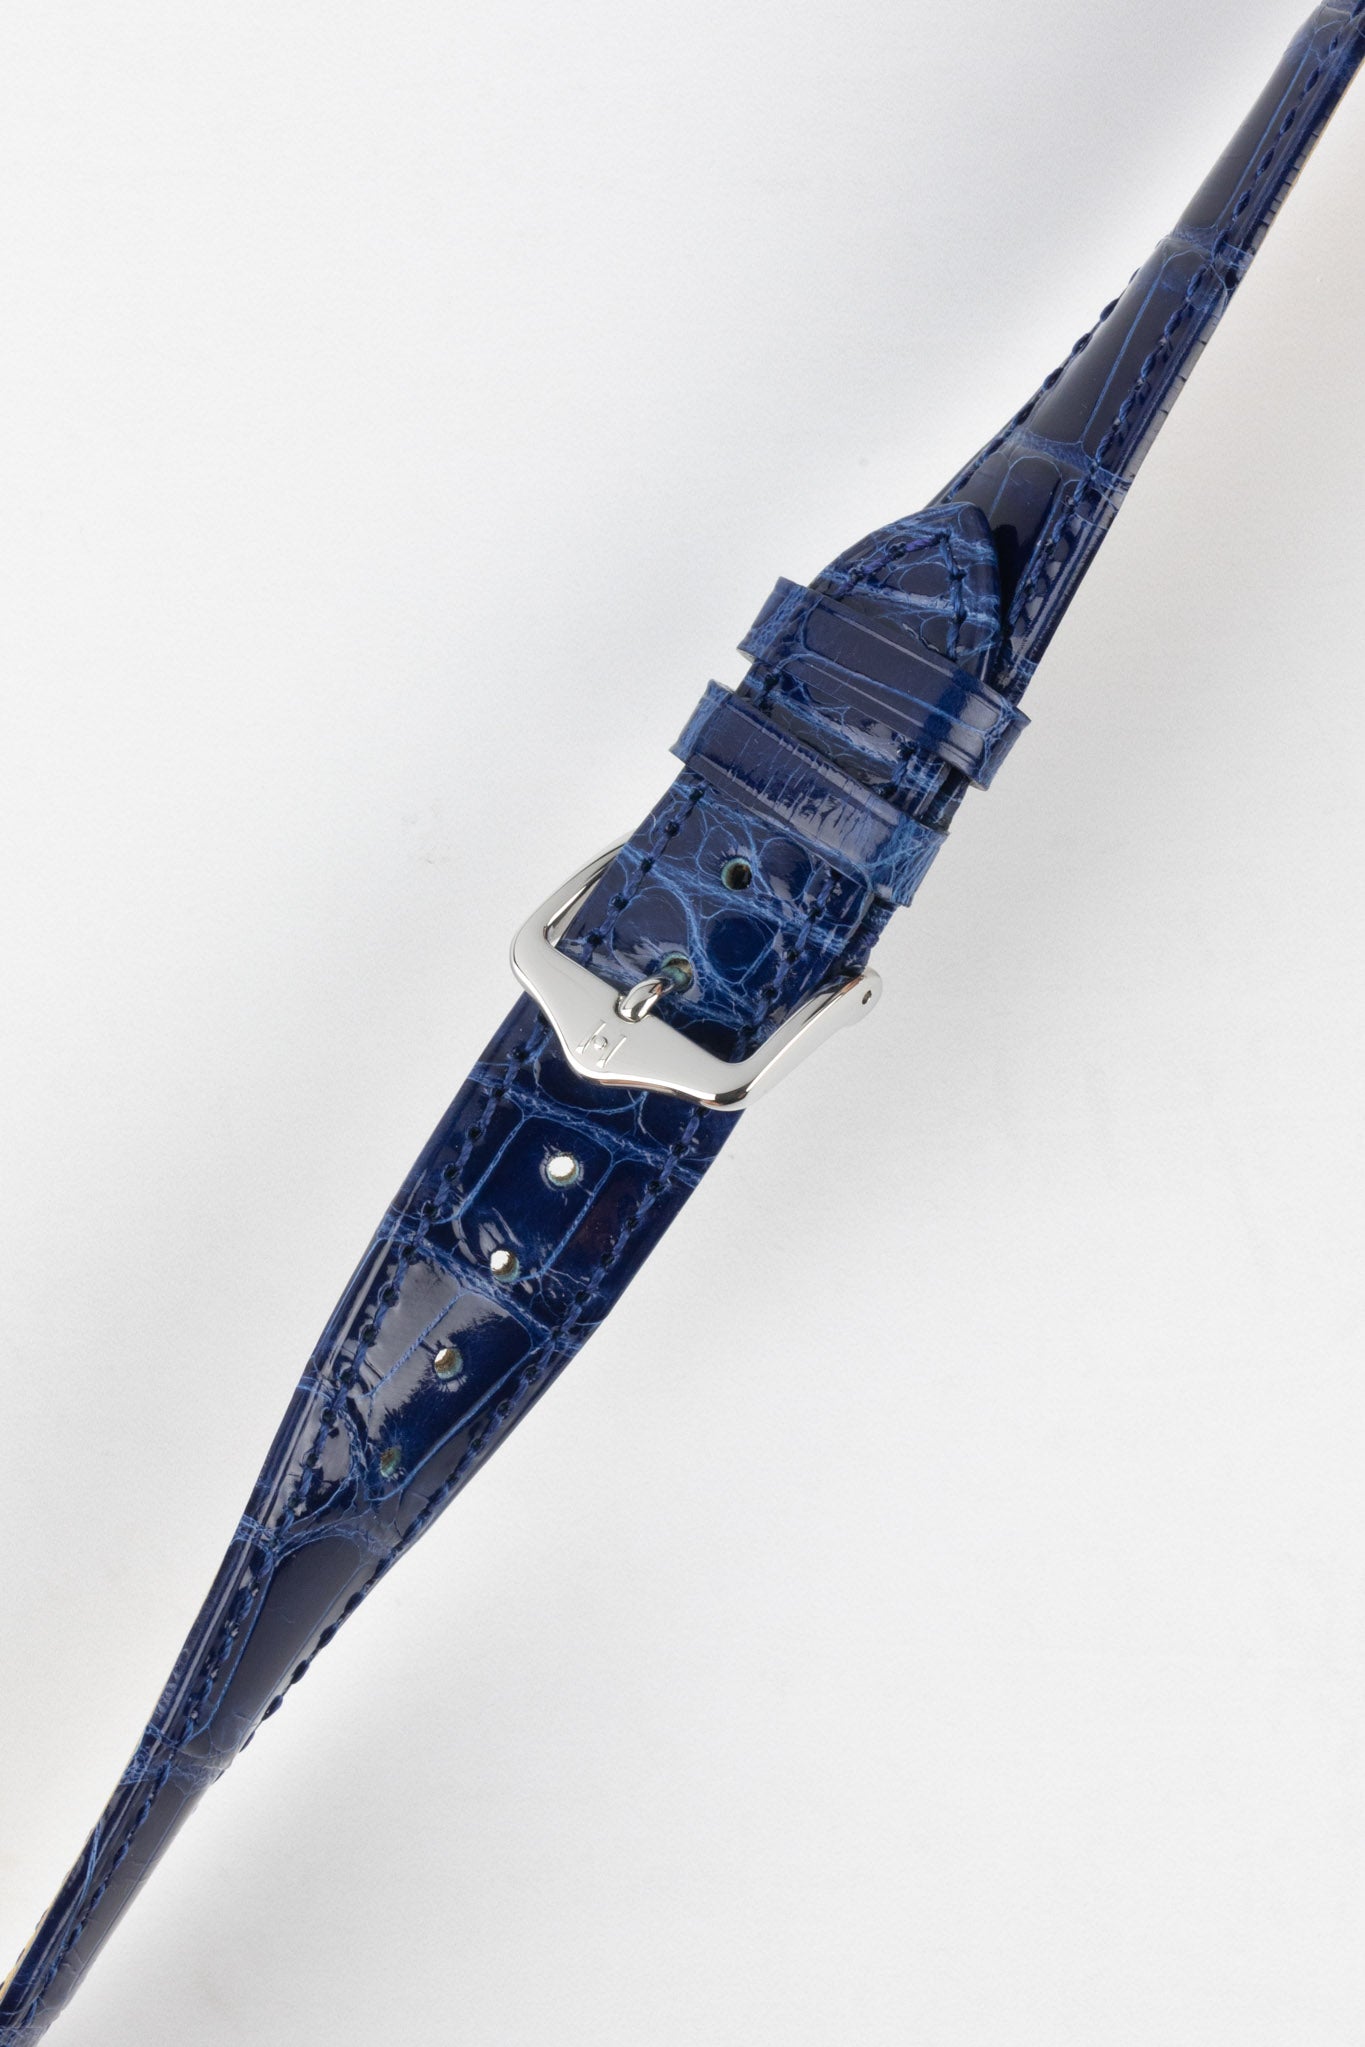 Hirsch LONDON Shiny Alligator Leather Watch Strap in BLUE